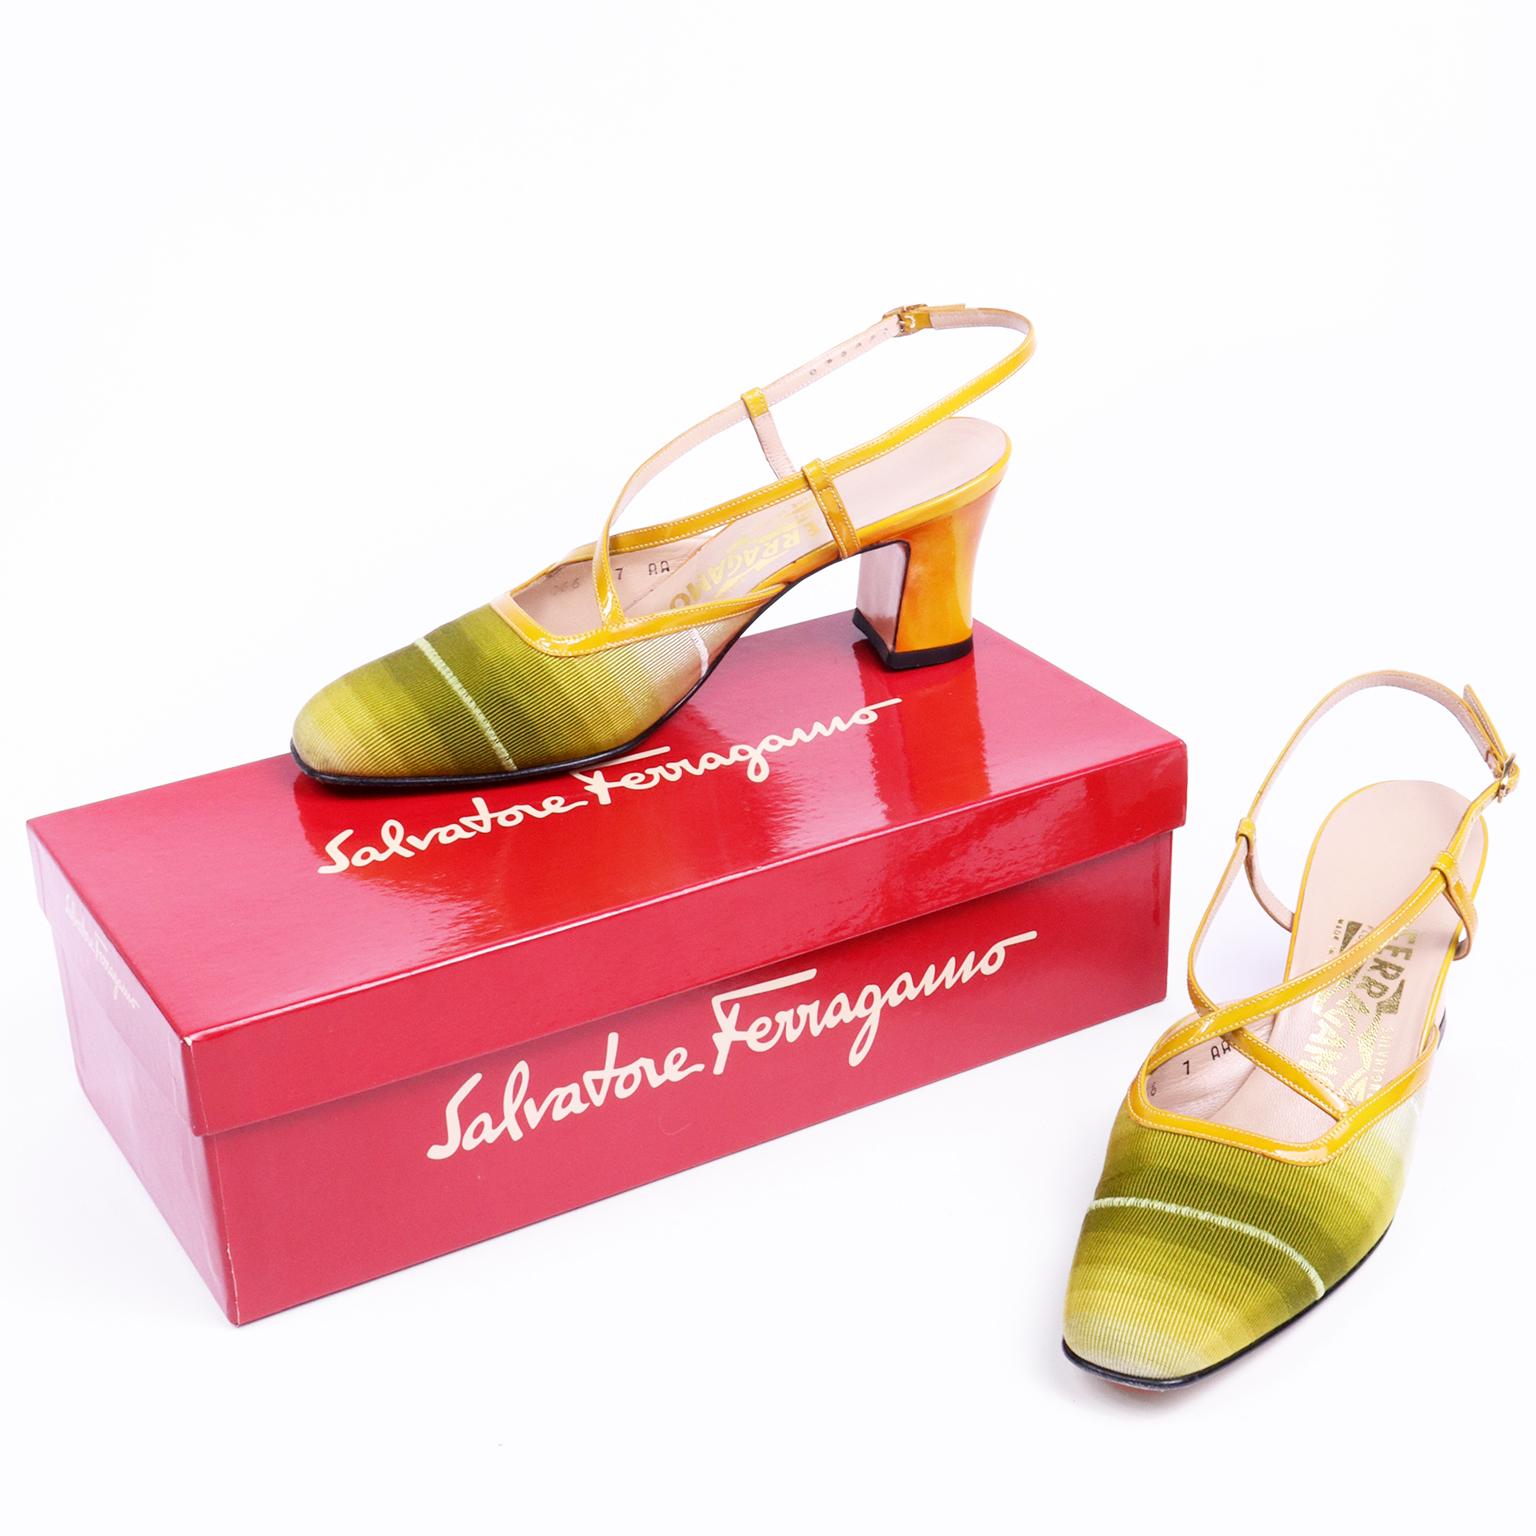 Vintage Salvatore Ferragamo Shoes - 20 For Sale on 1stDibs